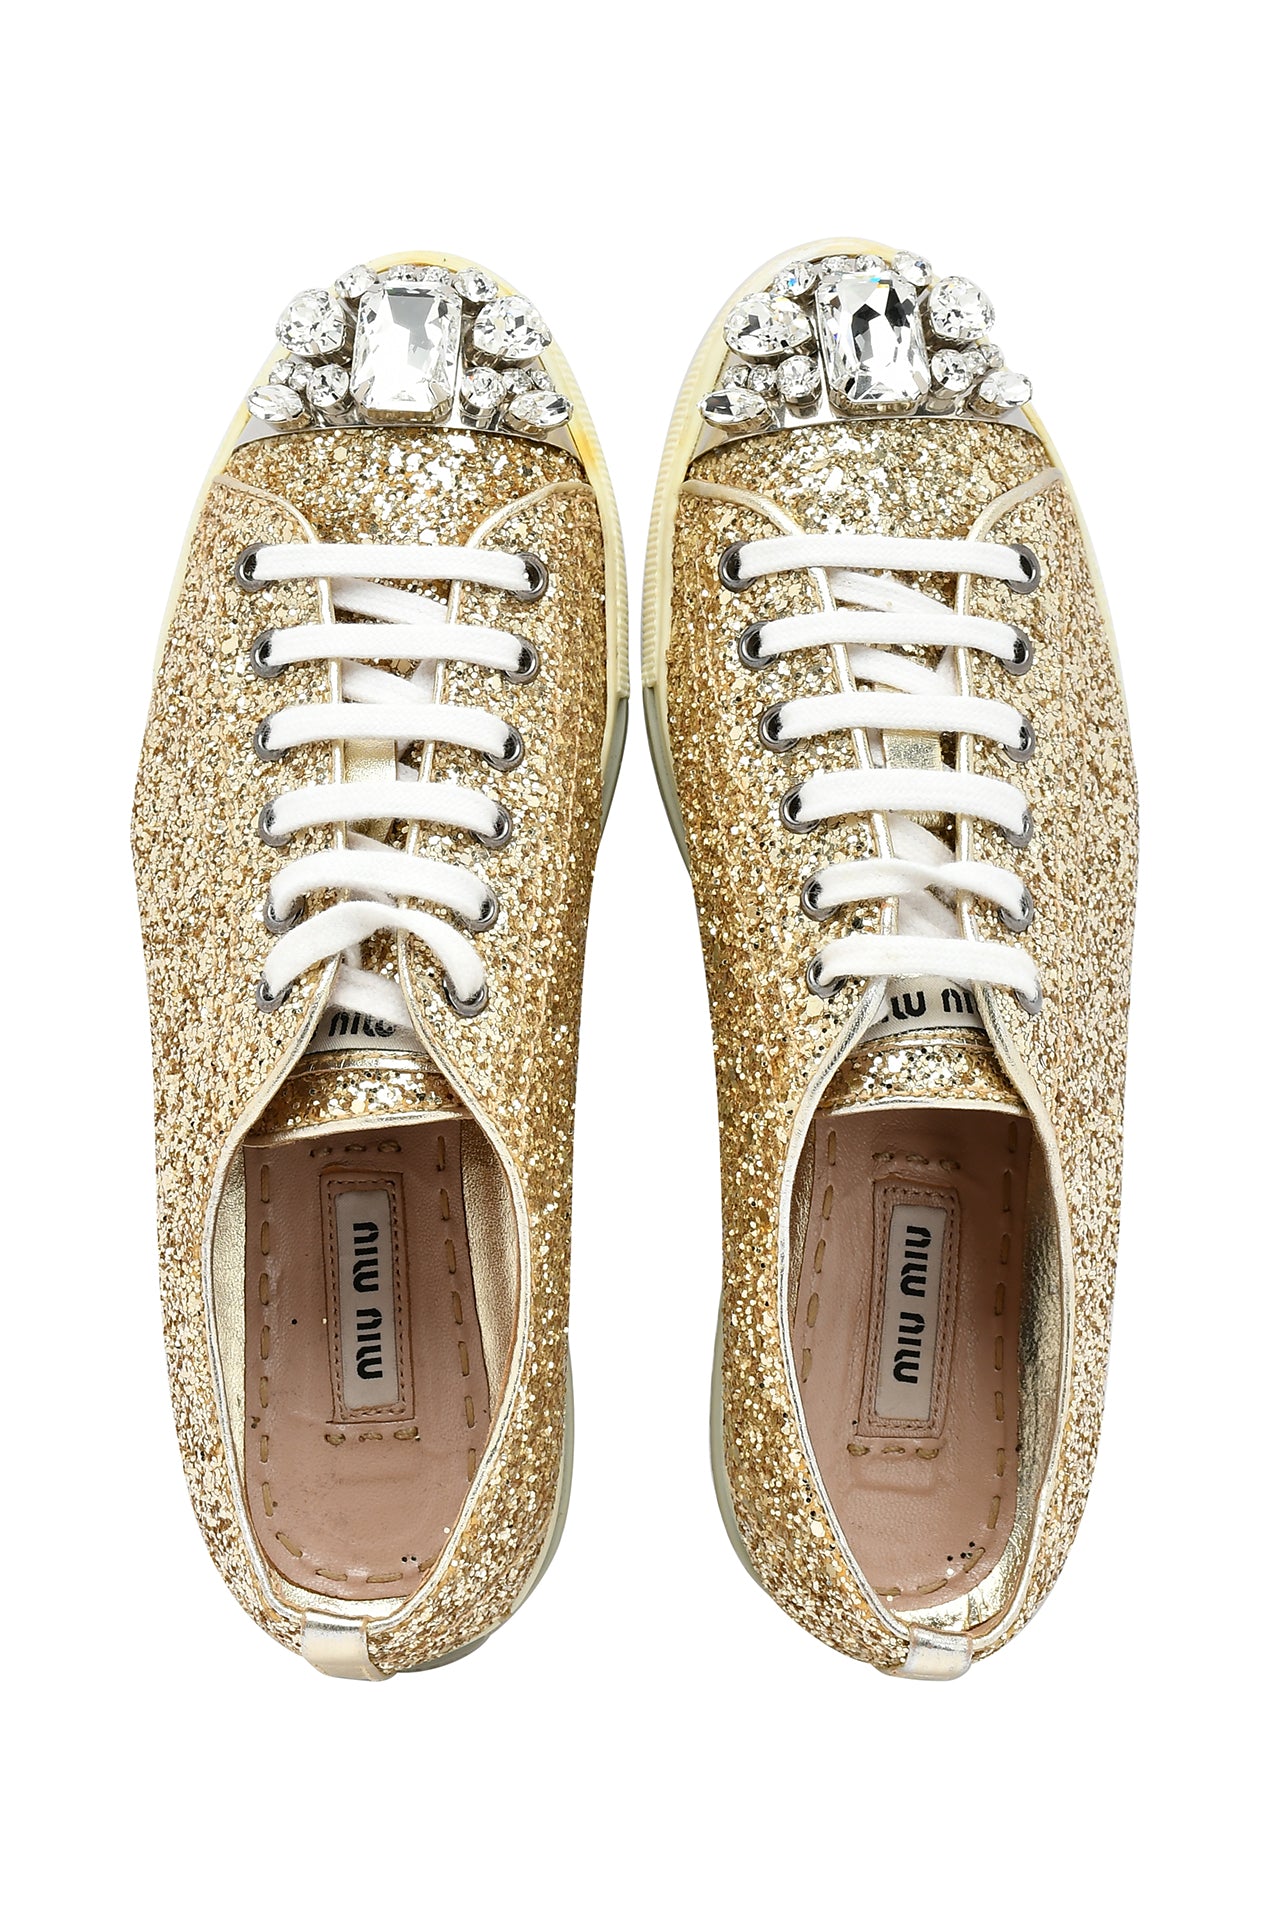 Miu Miu Coarse Glitter Leather Crystal Embellished Cap Toe Sneakers EU 36.5